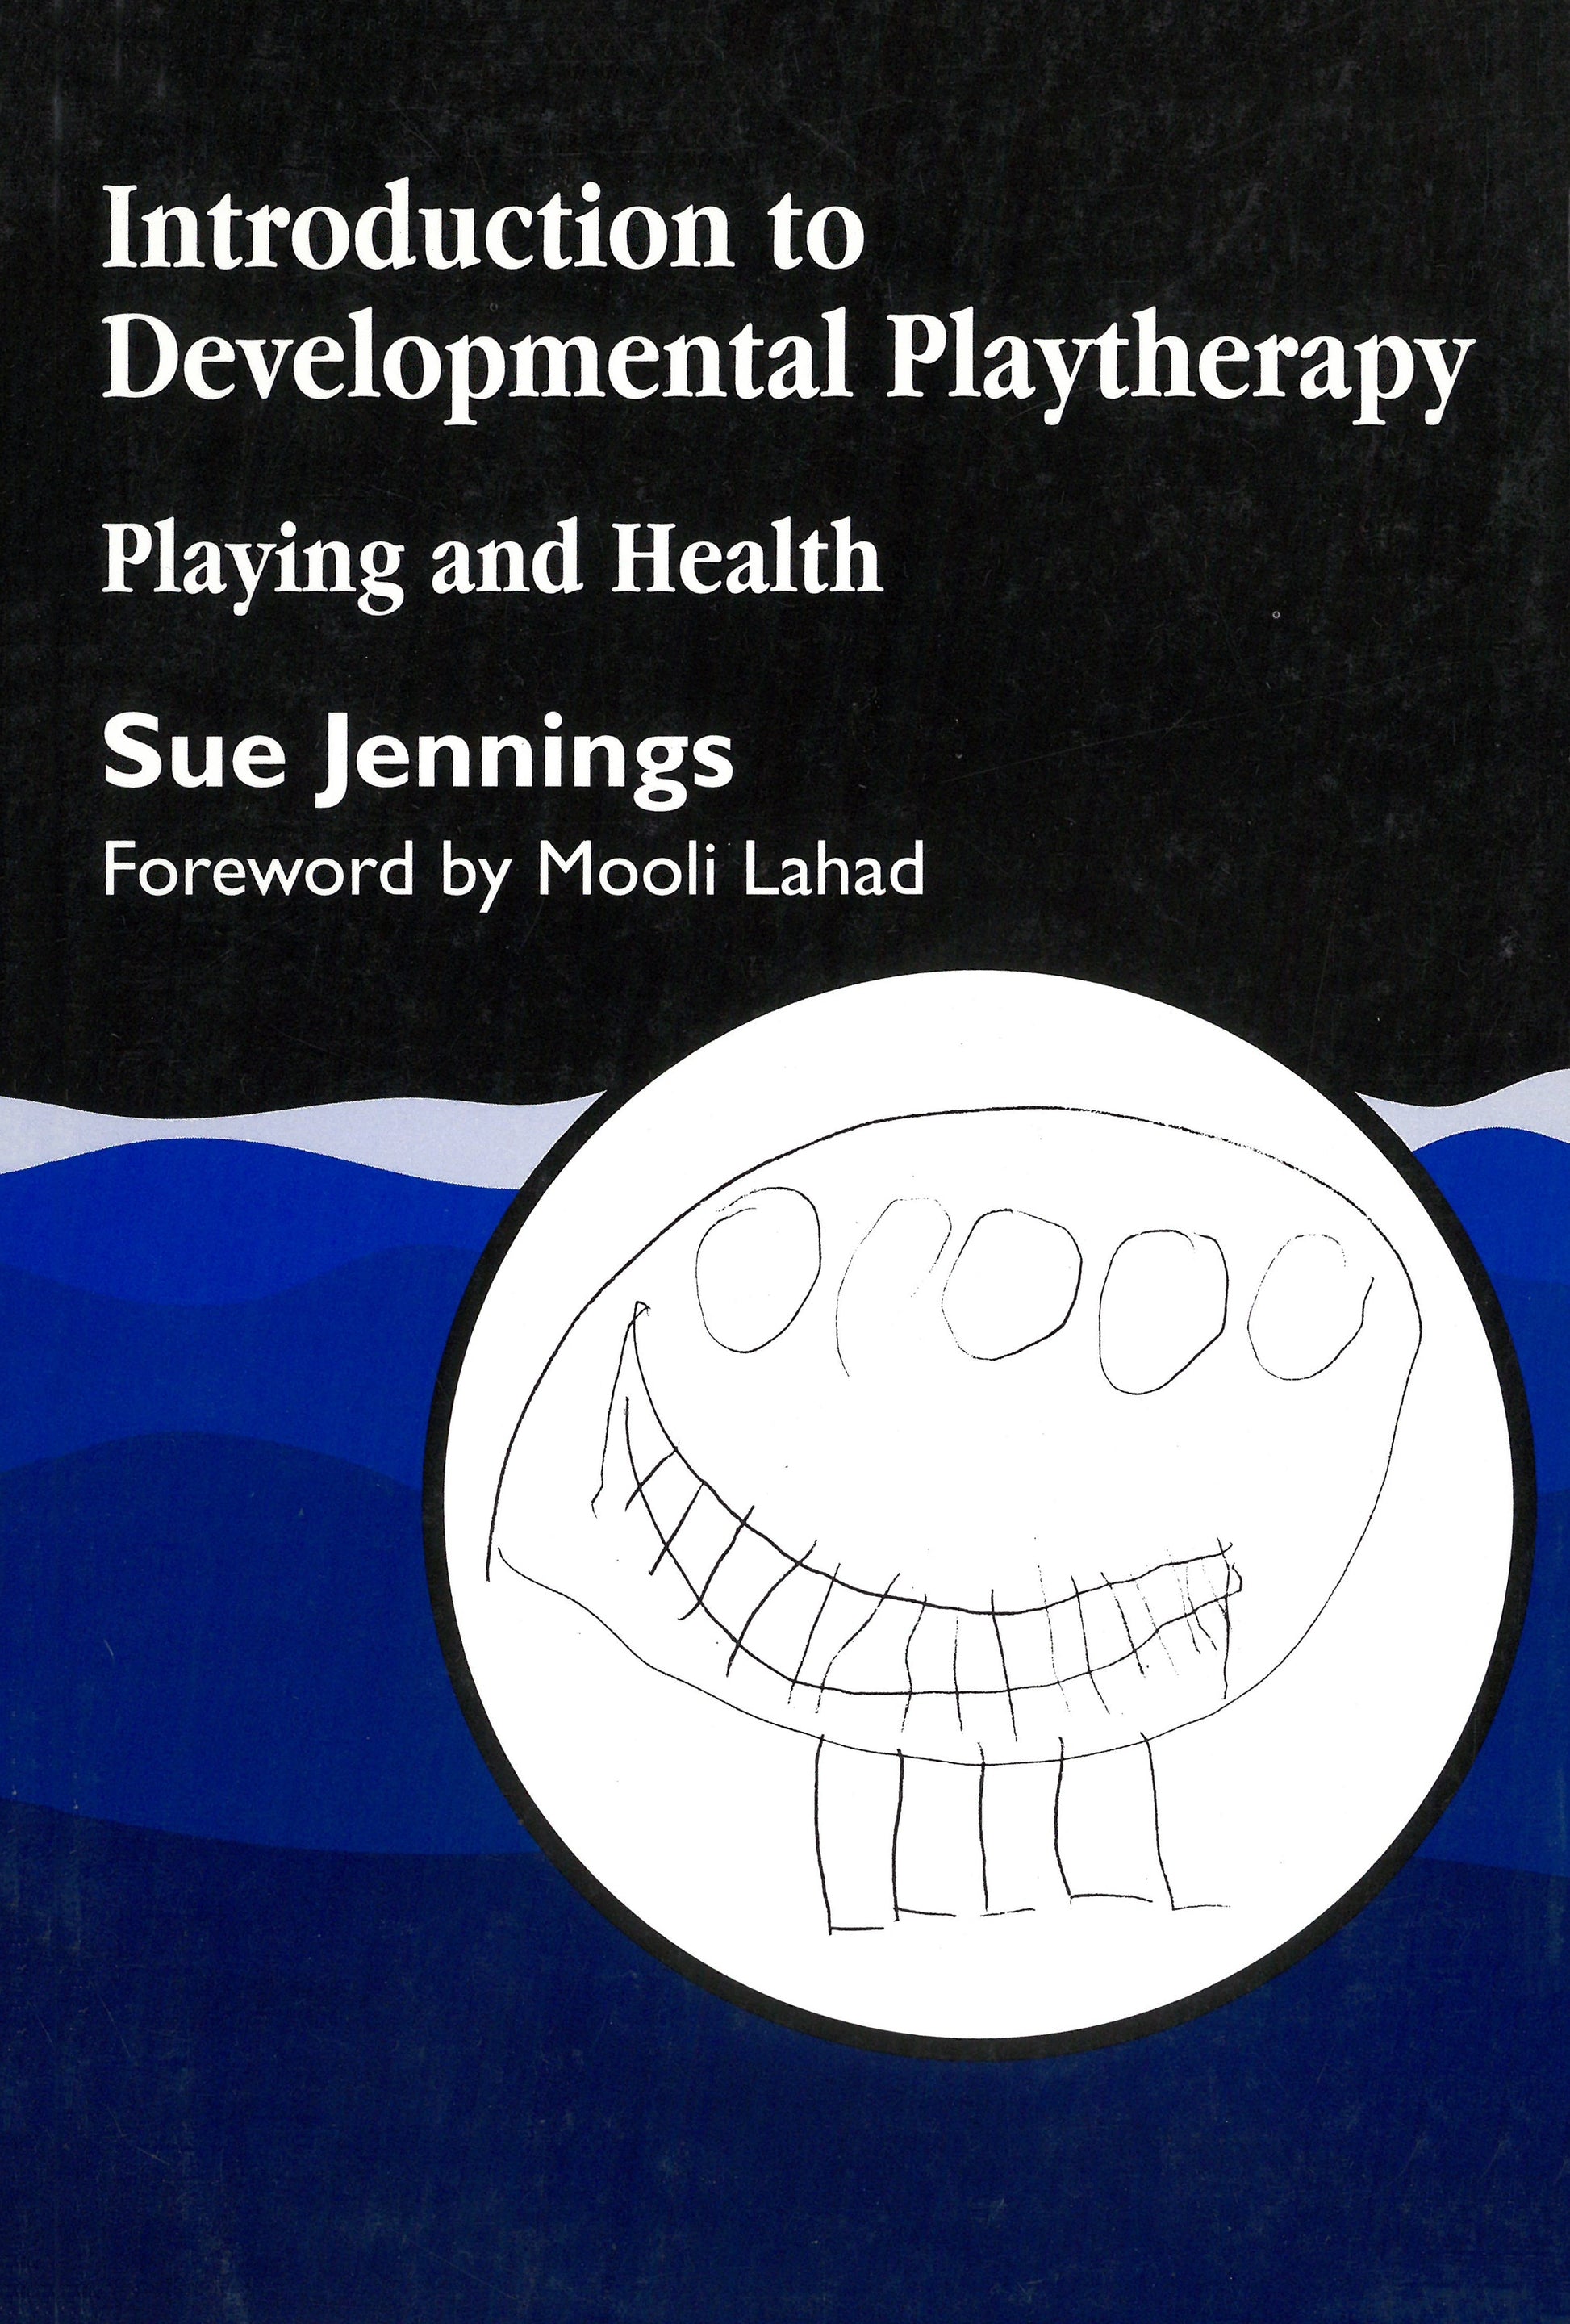 Introduction to Developmental Playtherapy by Sue Jennings, Professor Mooli Lahad